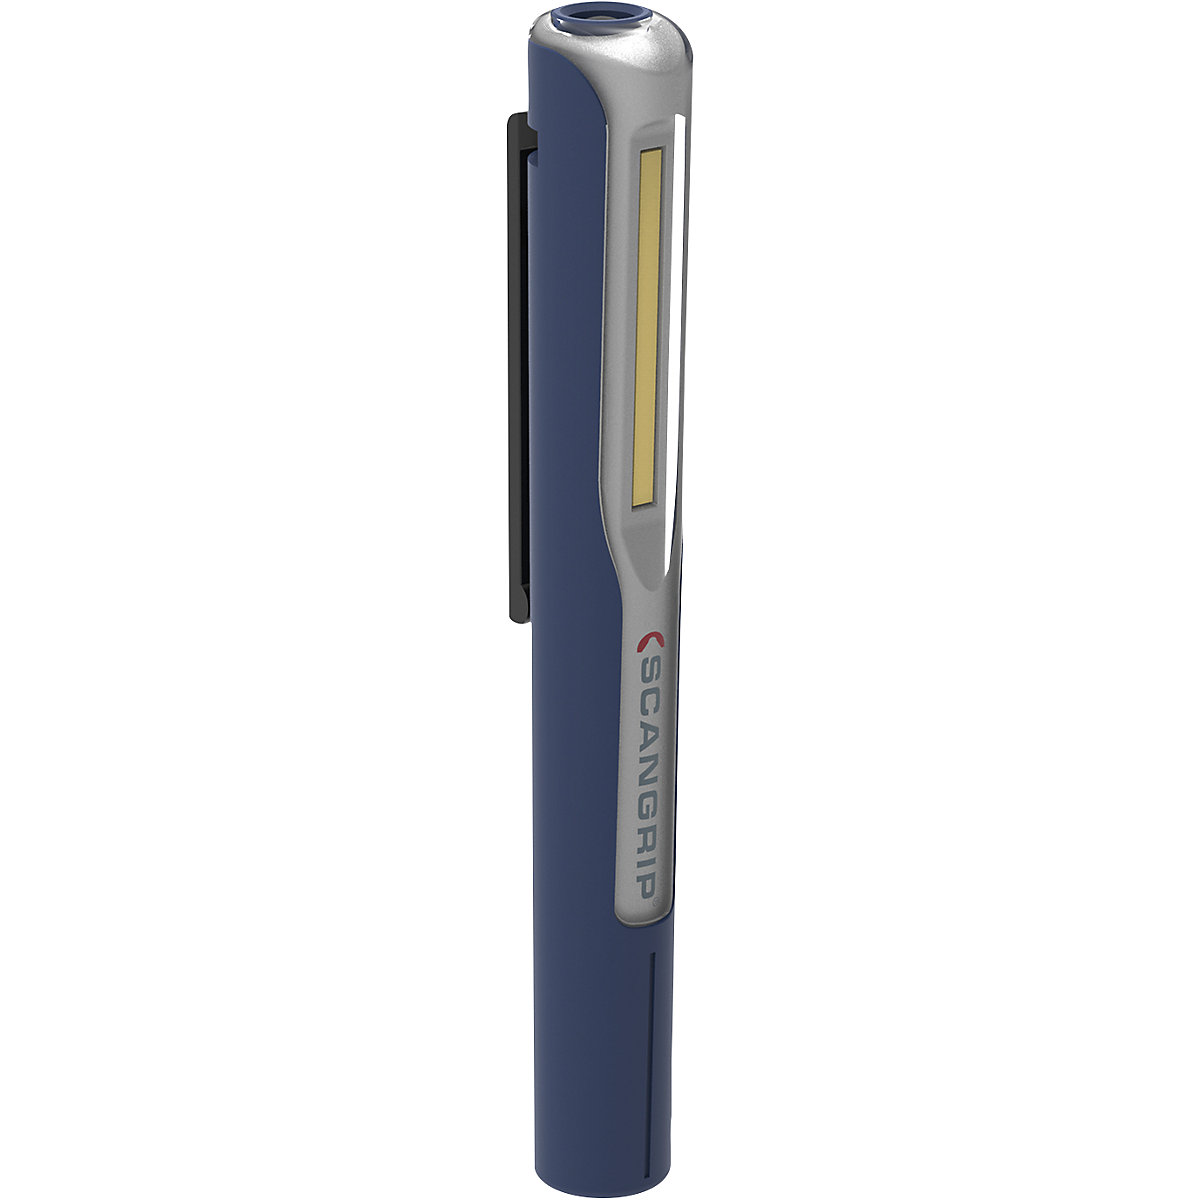 Akumulatorowa latarka długopisowa LED MAG PEN 3 – SCANGRIP (Zdjęcie produktu 2)-1